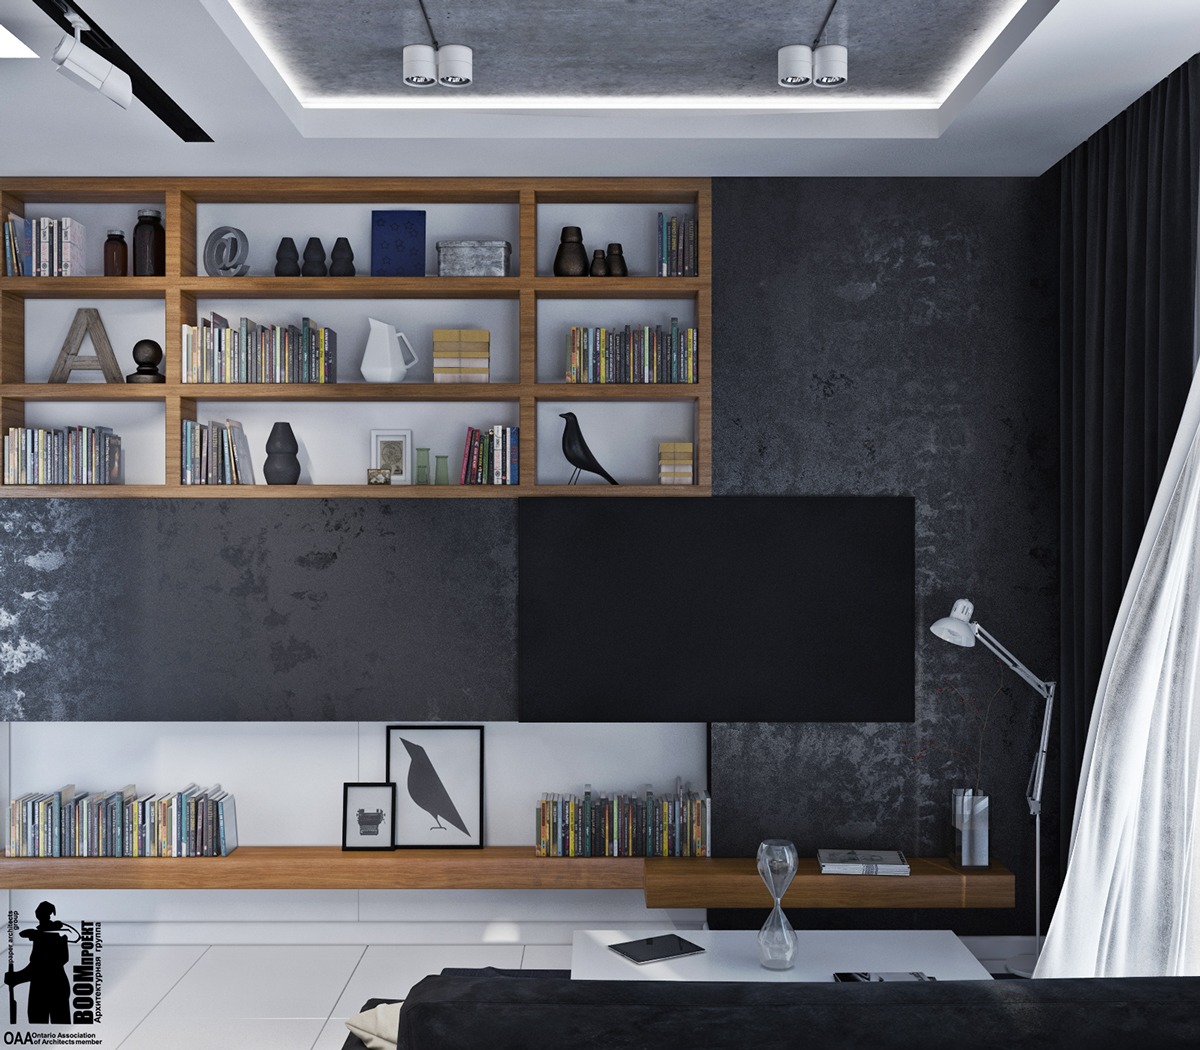 Minimalist living room ideas "width =" 1200 "height =" 1050 "srcset =" https://mileray.com/wp-content/uploads/2020/05/1588515079_516_Monochromatic-Living-Room-Colors-Idea-Combined-With-Wooden-Element.jpg 1200w, https: // myfashionos .com / wp-content / uploads / 2016/04 / crow-interior-decor-inspiration-300x263.jpg 300w, https://mileray.com/wp-content/uploads/2016/04/crow-interior- decor- inspiration-768x672.jpg 768w, https://mileray.com/wp-content/uploads/2016/04/crow-interior-decor-inspiration-1024x896.jpg 1024w, https://mileray.com/wp- content / uploads / 2016/04 / crow-interior-decor-inspiration-696x609.jpg 696w, https://mileray.com/wp-content/uploads/2016/04/crow-interior-decor-inspiration-1068x935.jpg 1068w, https://mileray.com/wp-content/uploads/2016/04/crow-interior-decor-inspiration-480x420.jpg 480w "sizes =" (maximum width: 1200px) 100vw, 1200px